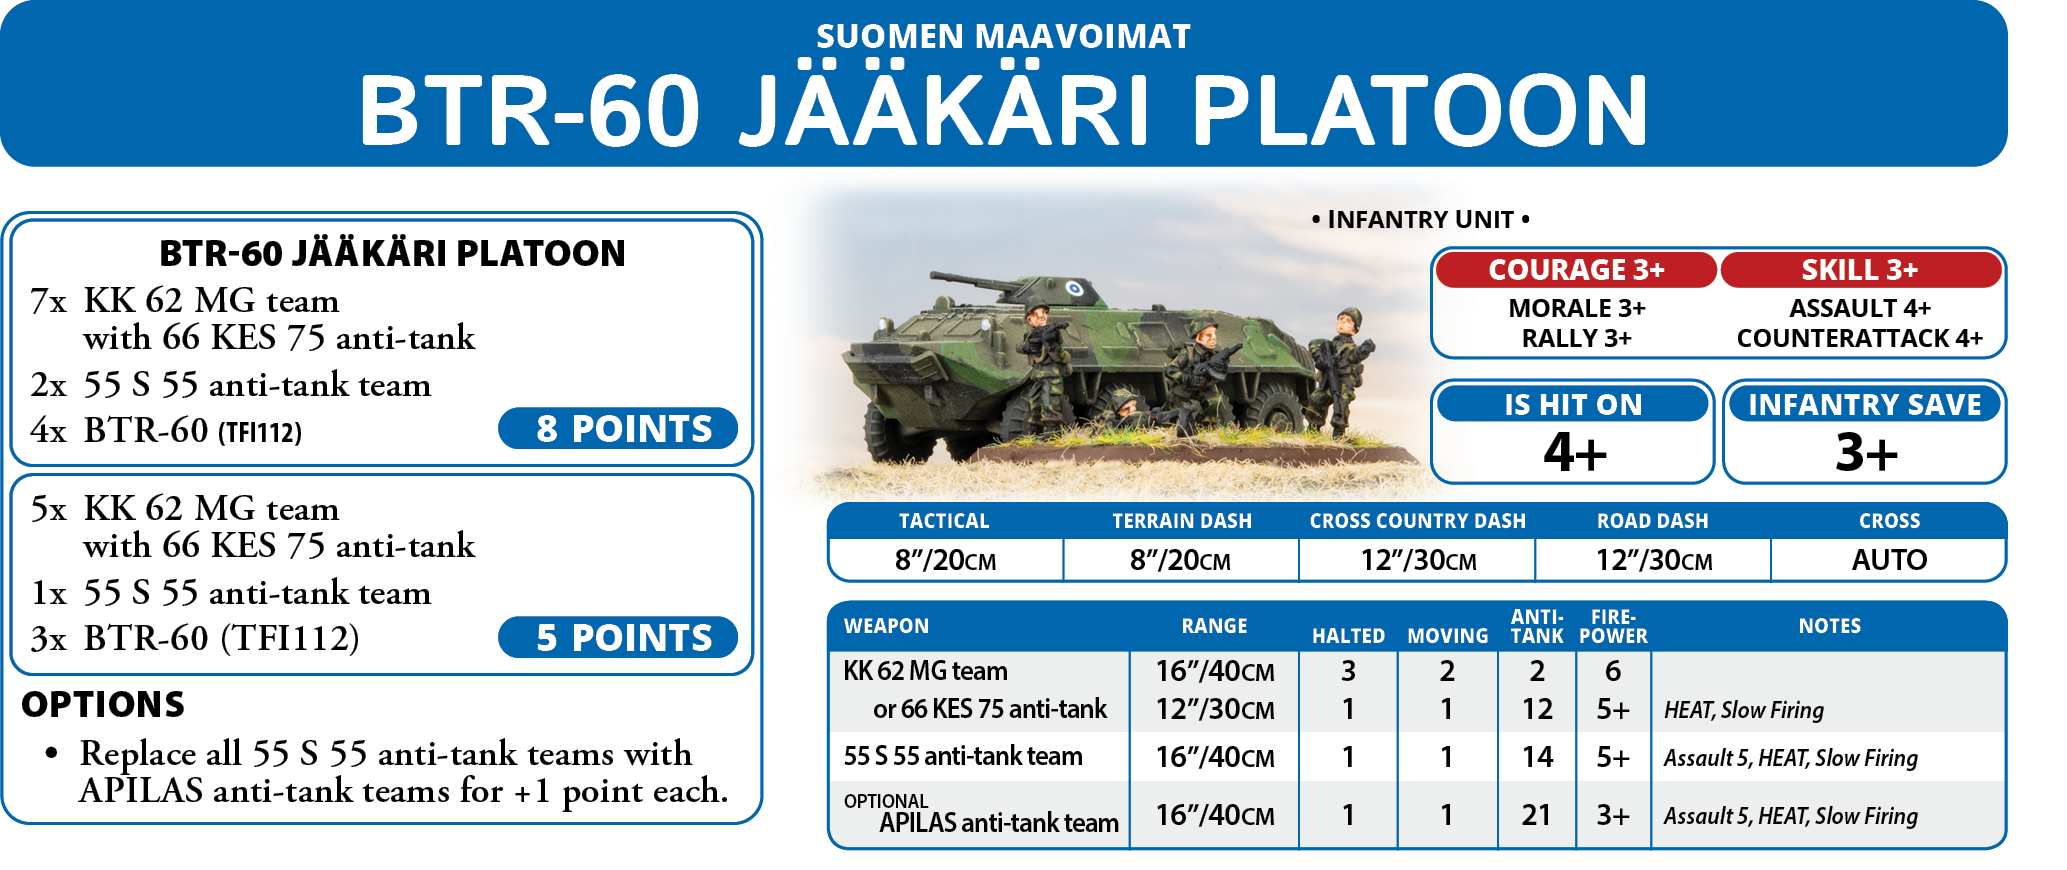 BTR-60 Jakaari Platoon